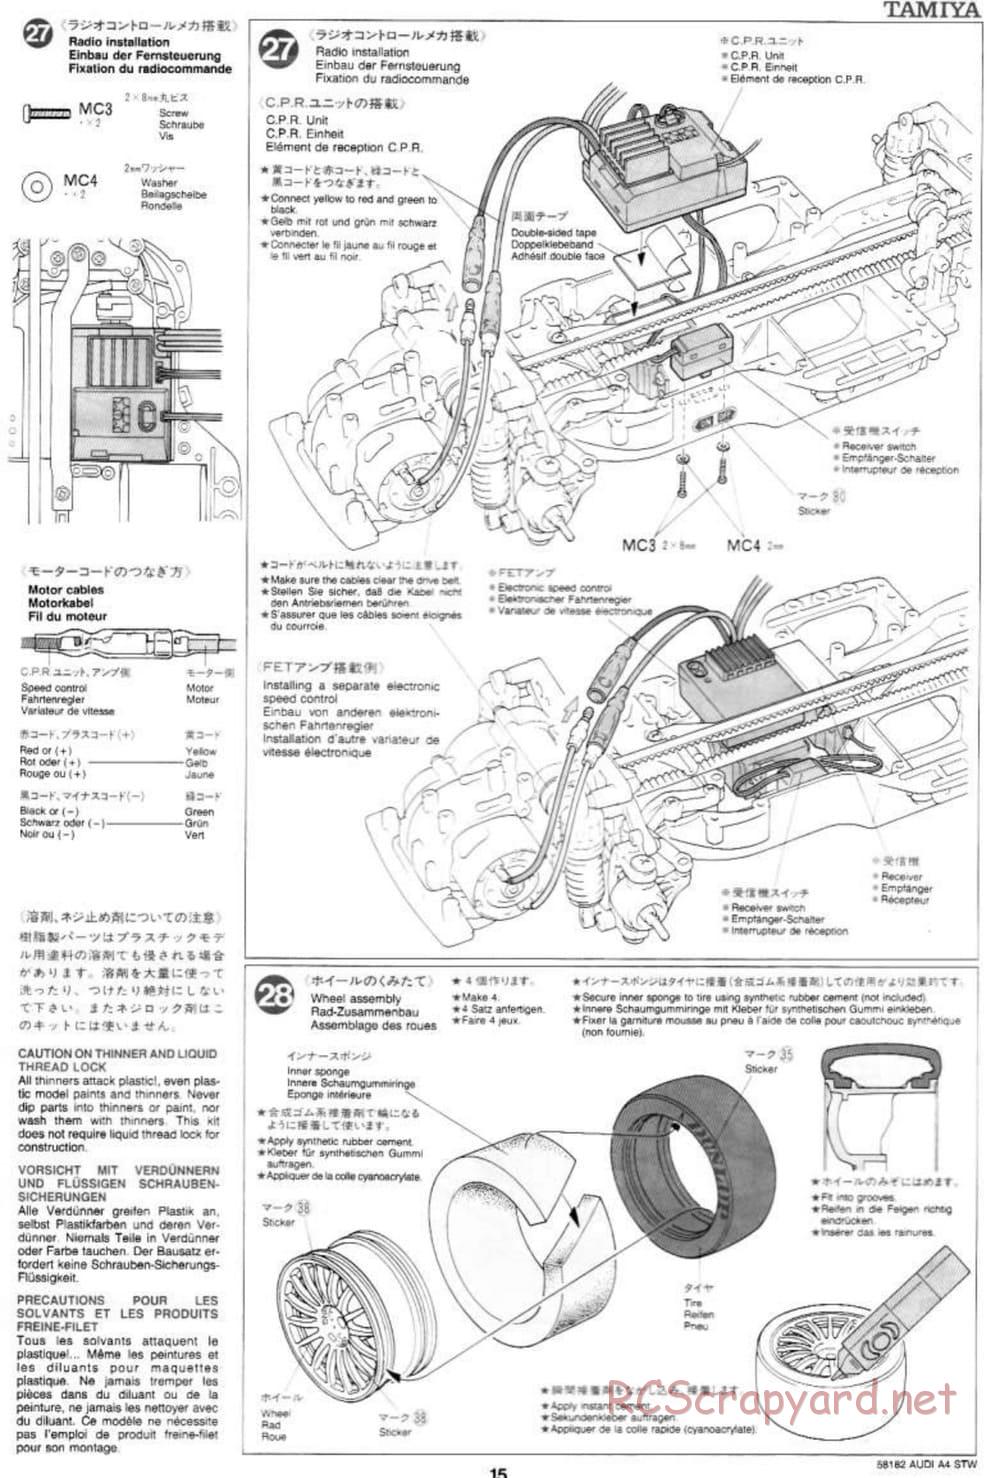 Tamiya - Audi A4 STW - TA-03F Chassis - Manual - Page 15